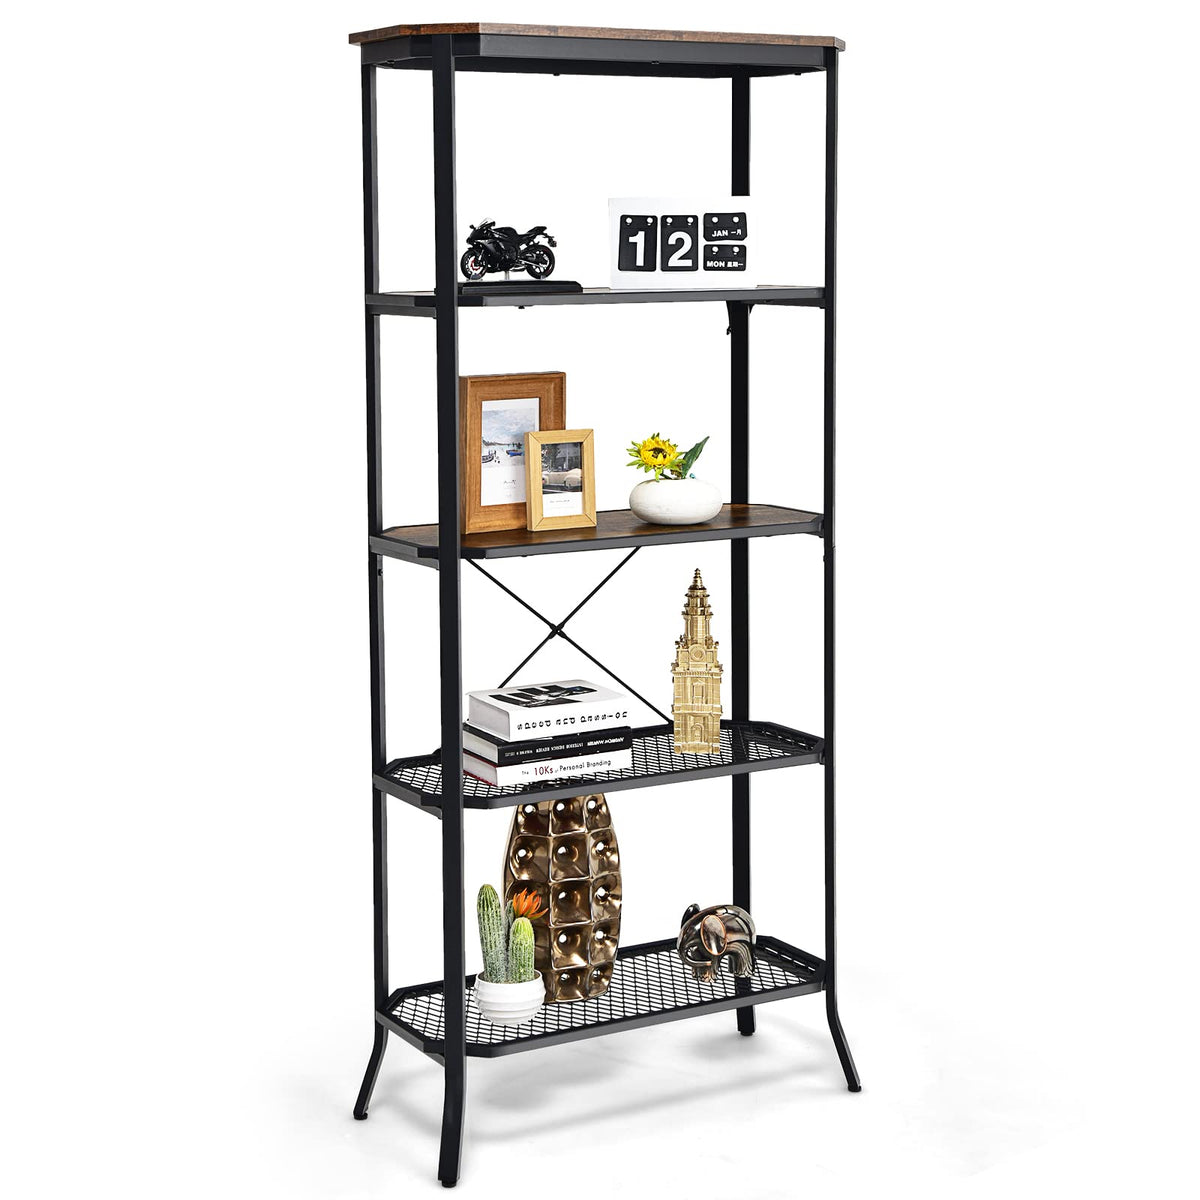 Giantex 5-Tier Bookshelf, Freestanding Shelving Unit